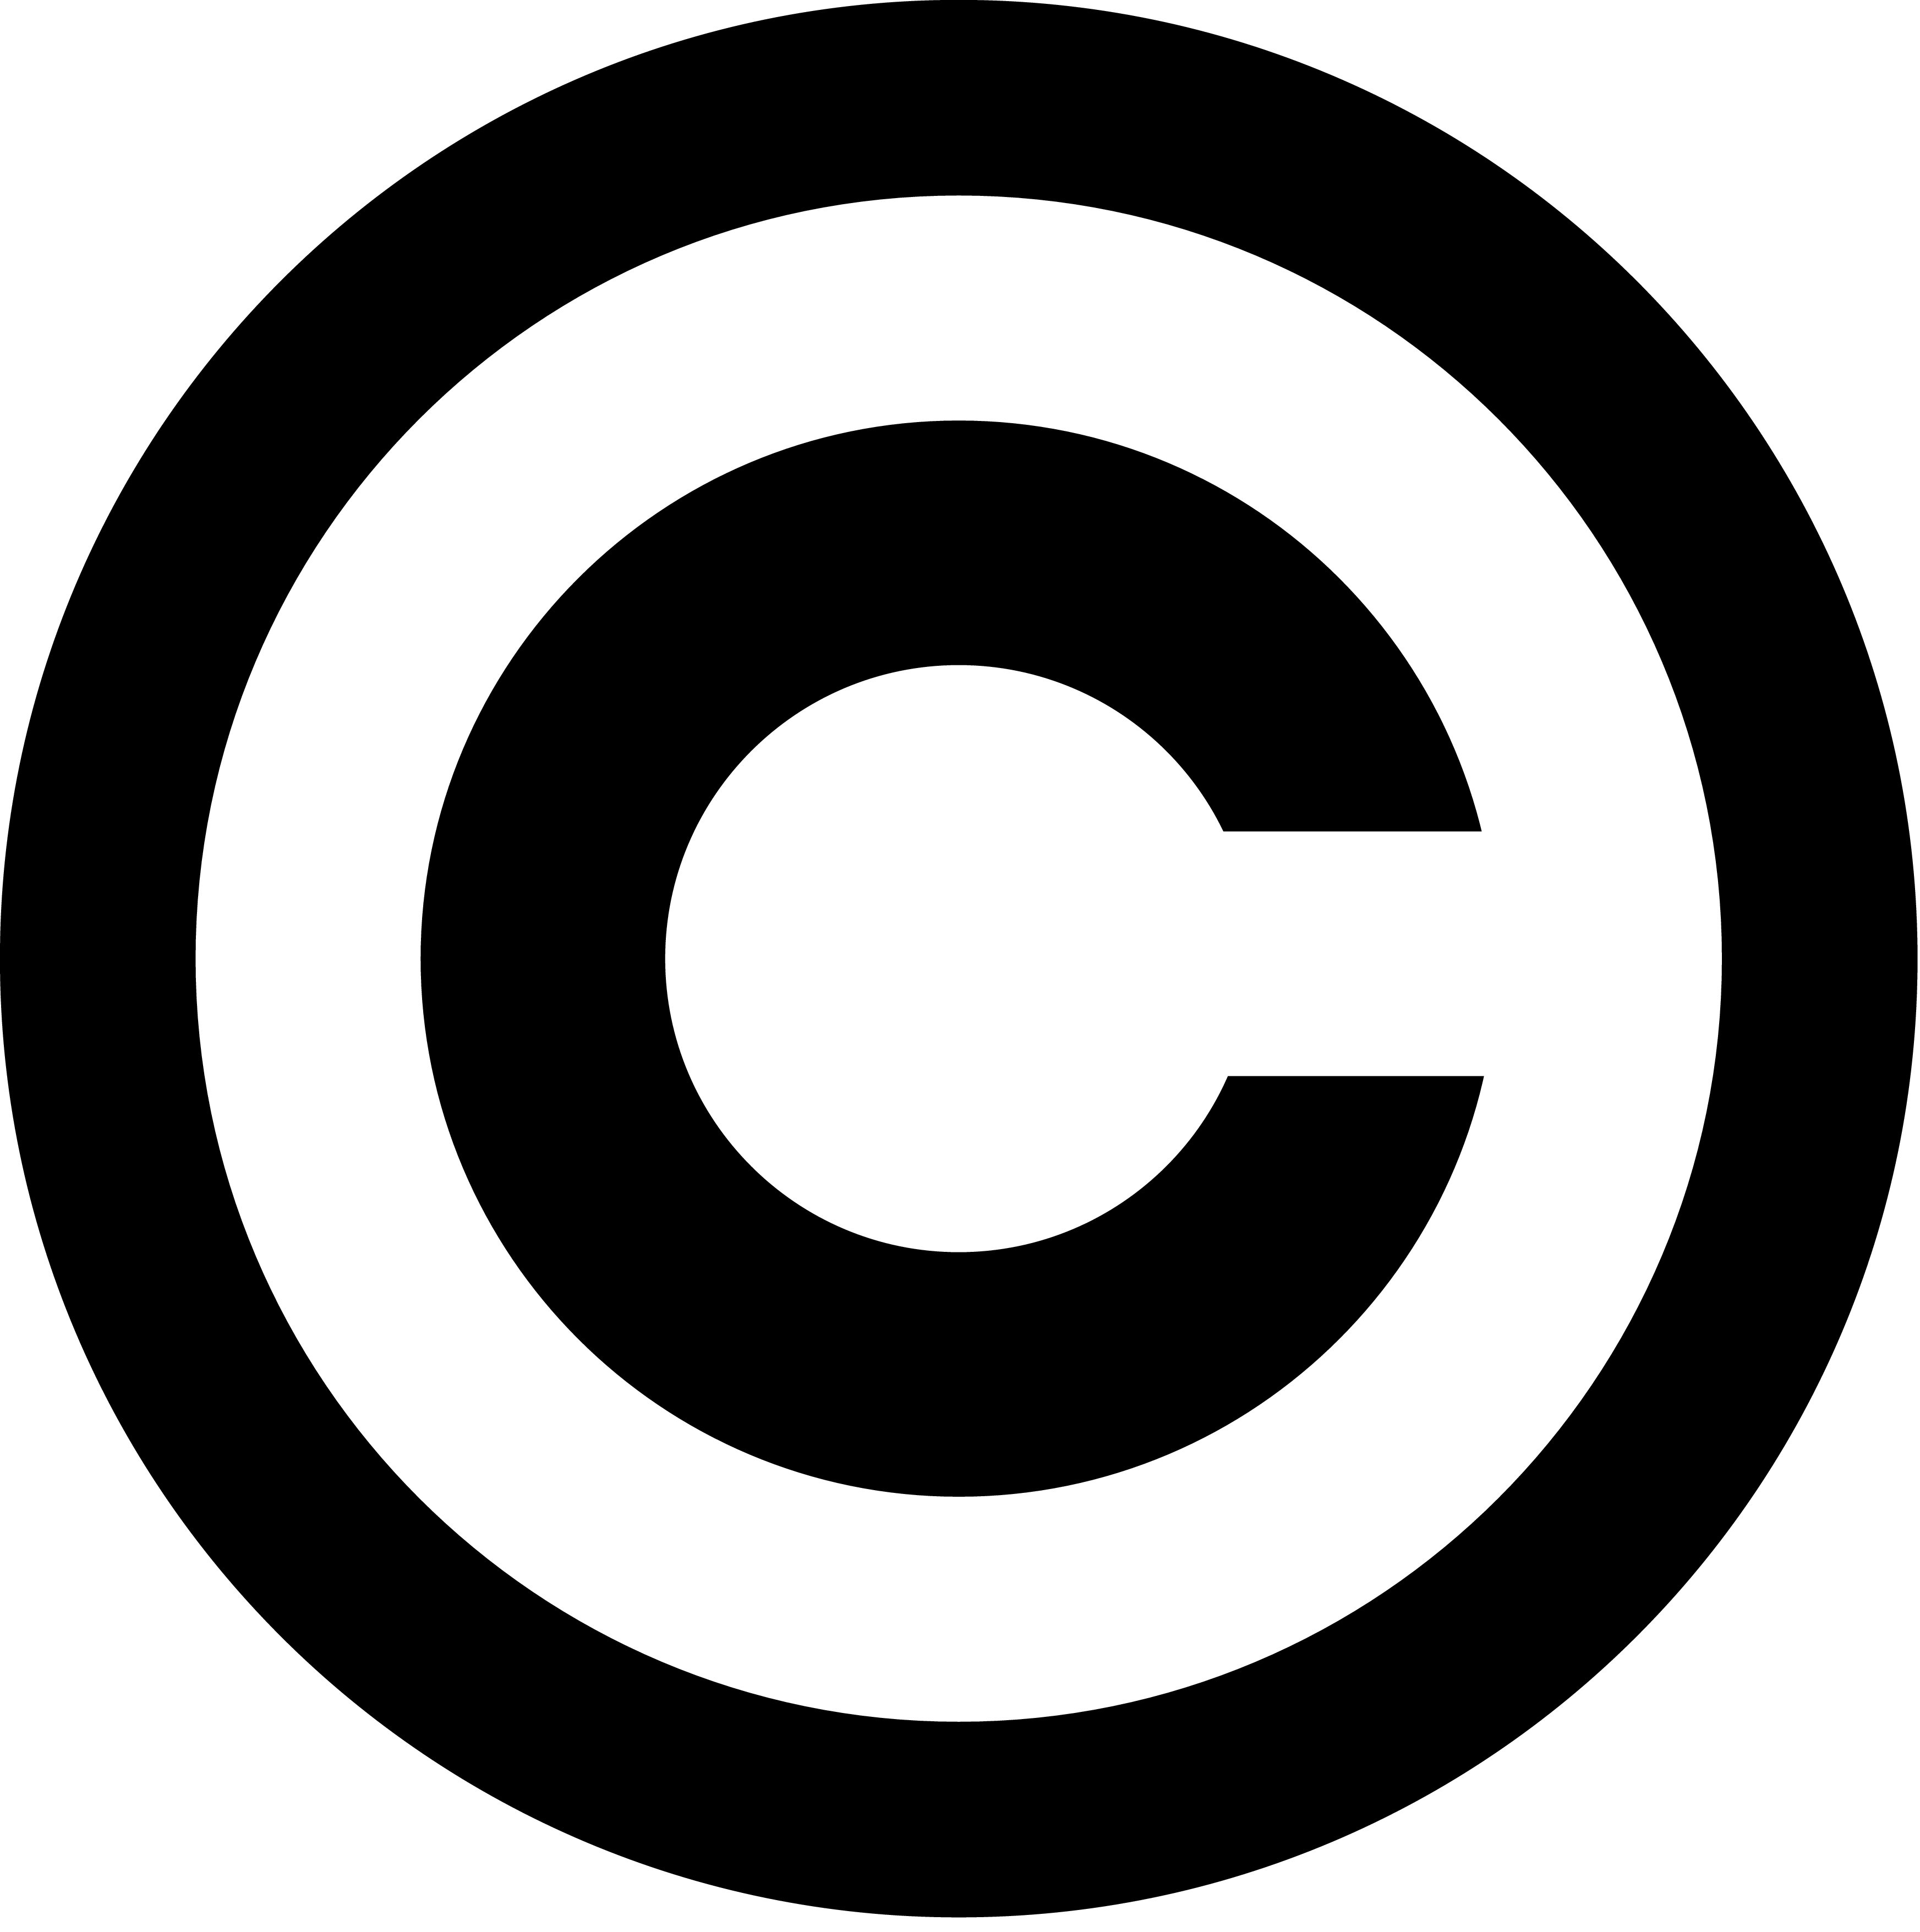 copyright logo png clipart best #28781